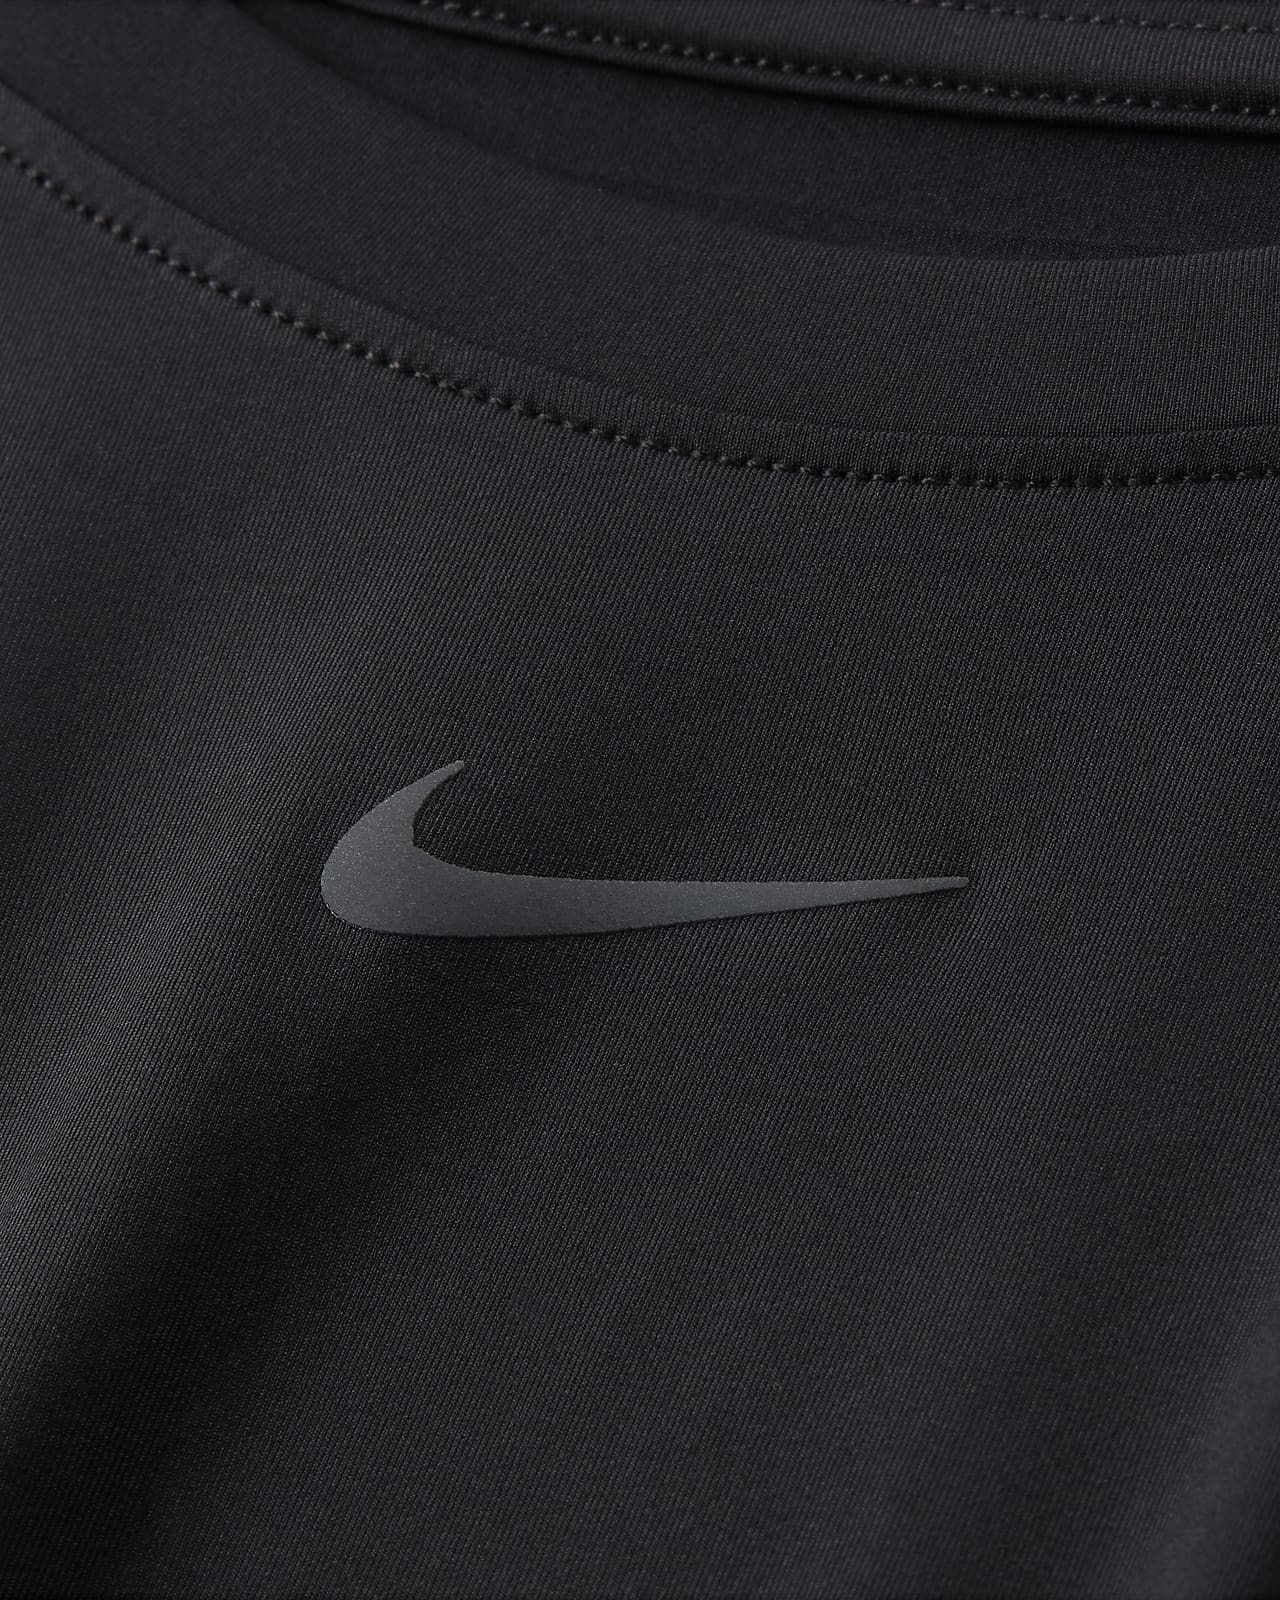 Nike One Classic Women's Dri-FIT Short-Sleeve Top (Plus Size)